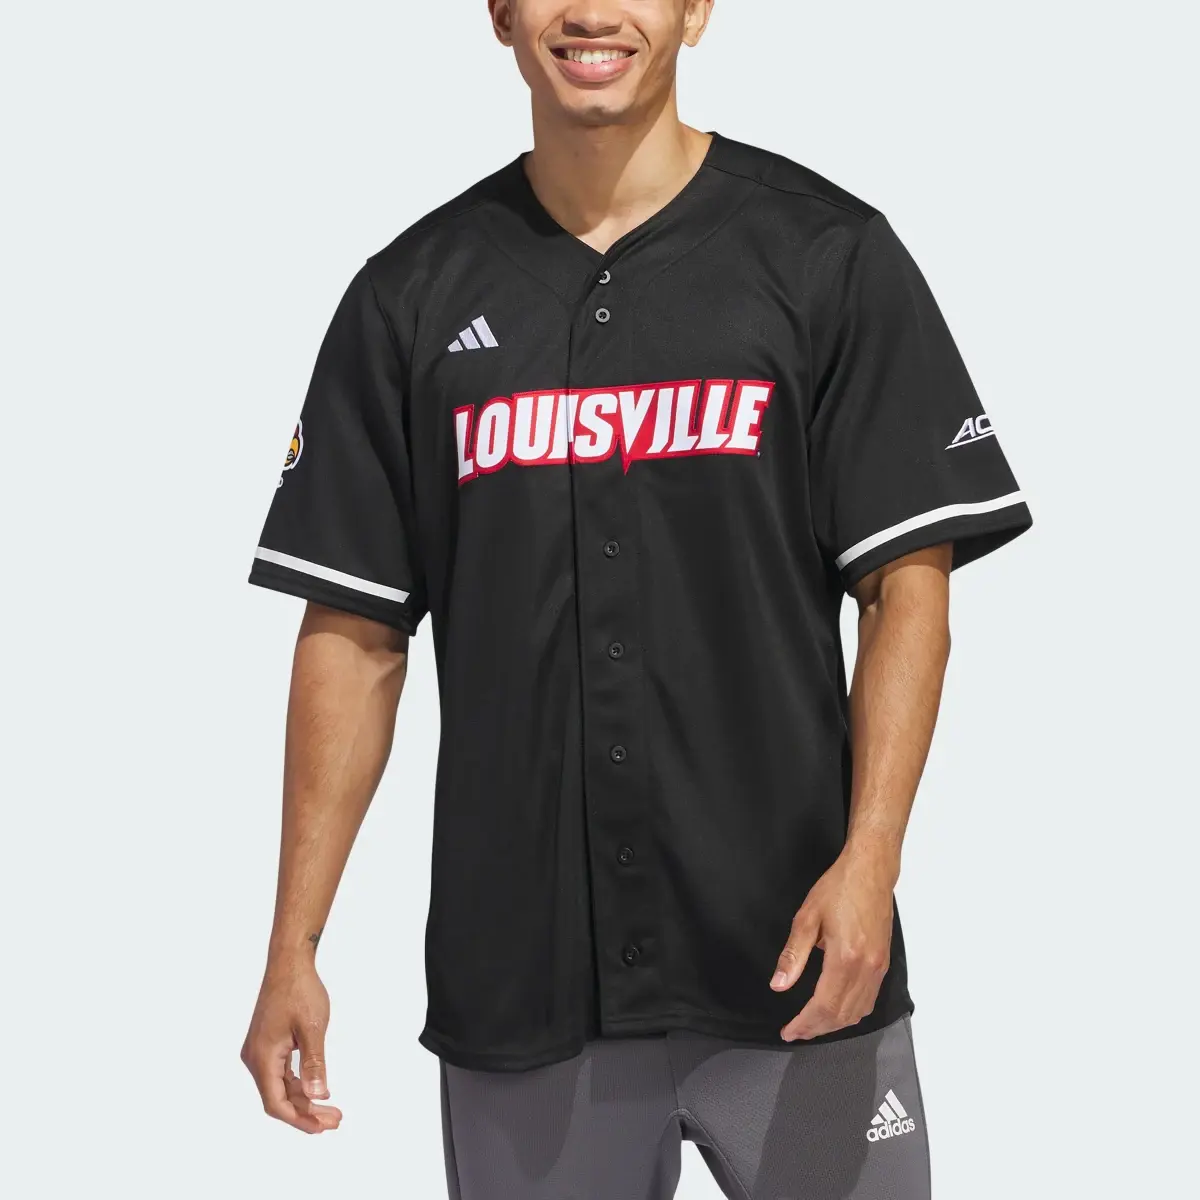 Adidas Louisville Baseball Jersey. 1